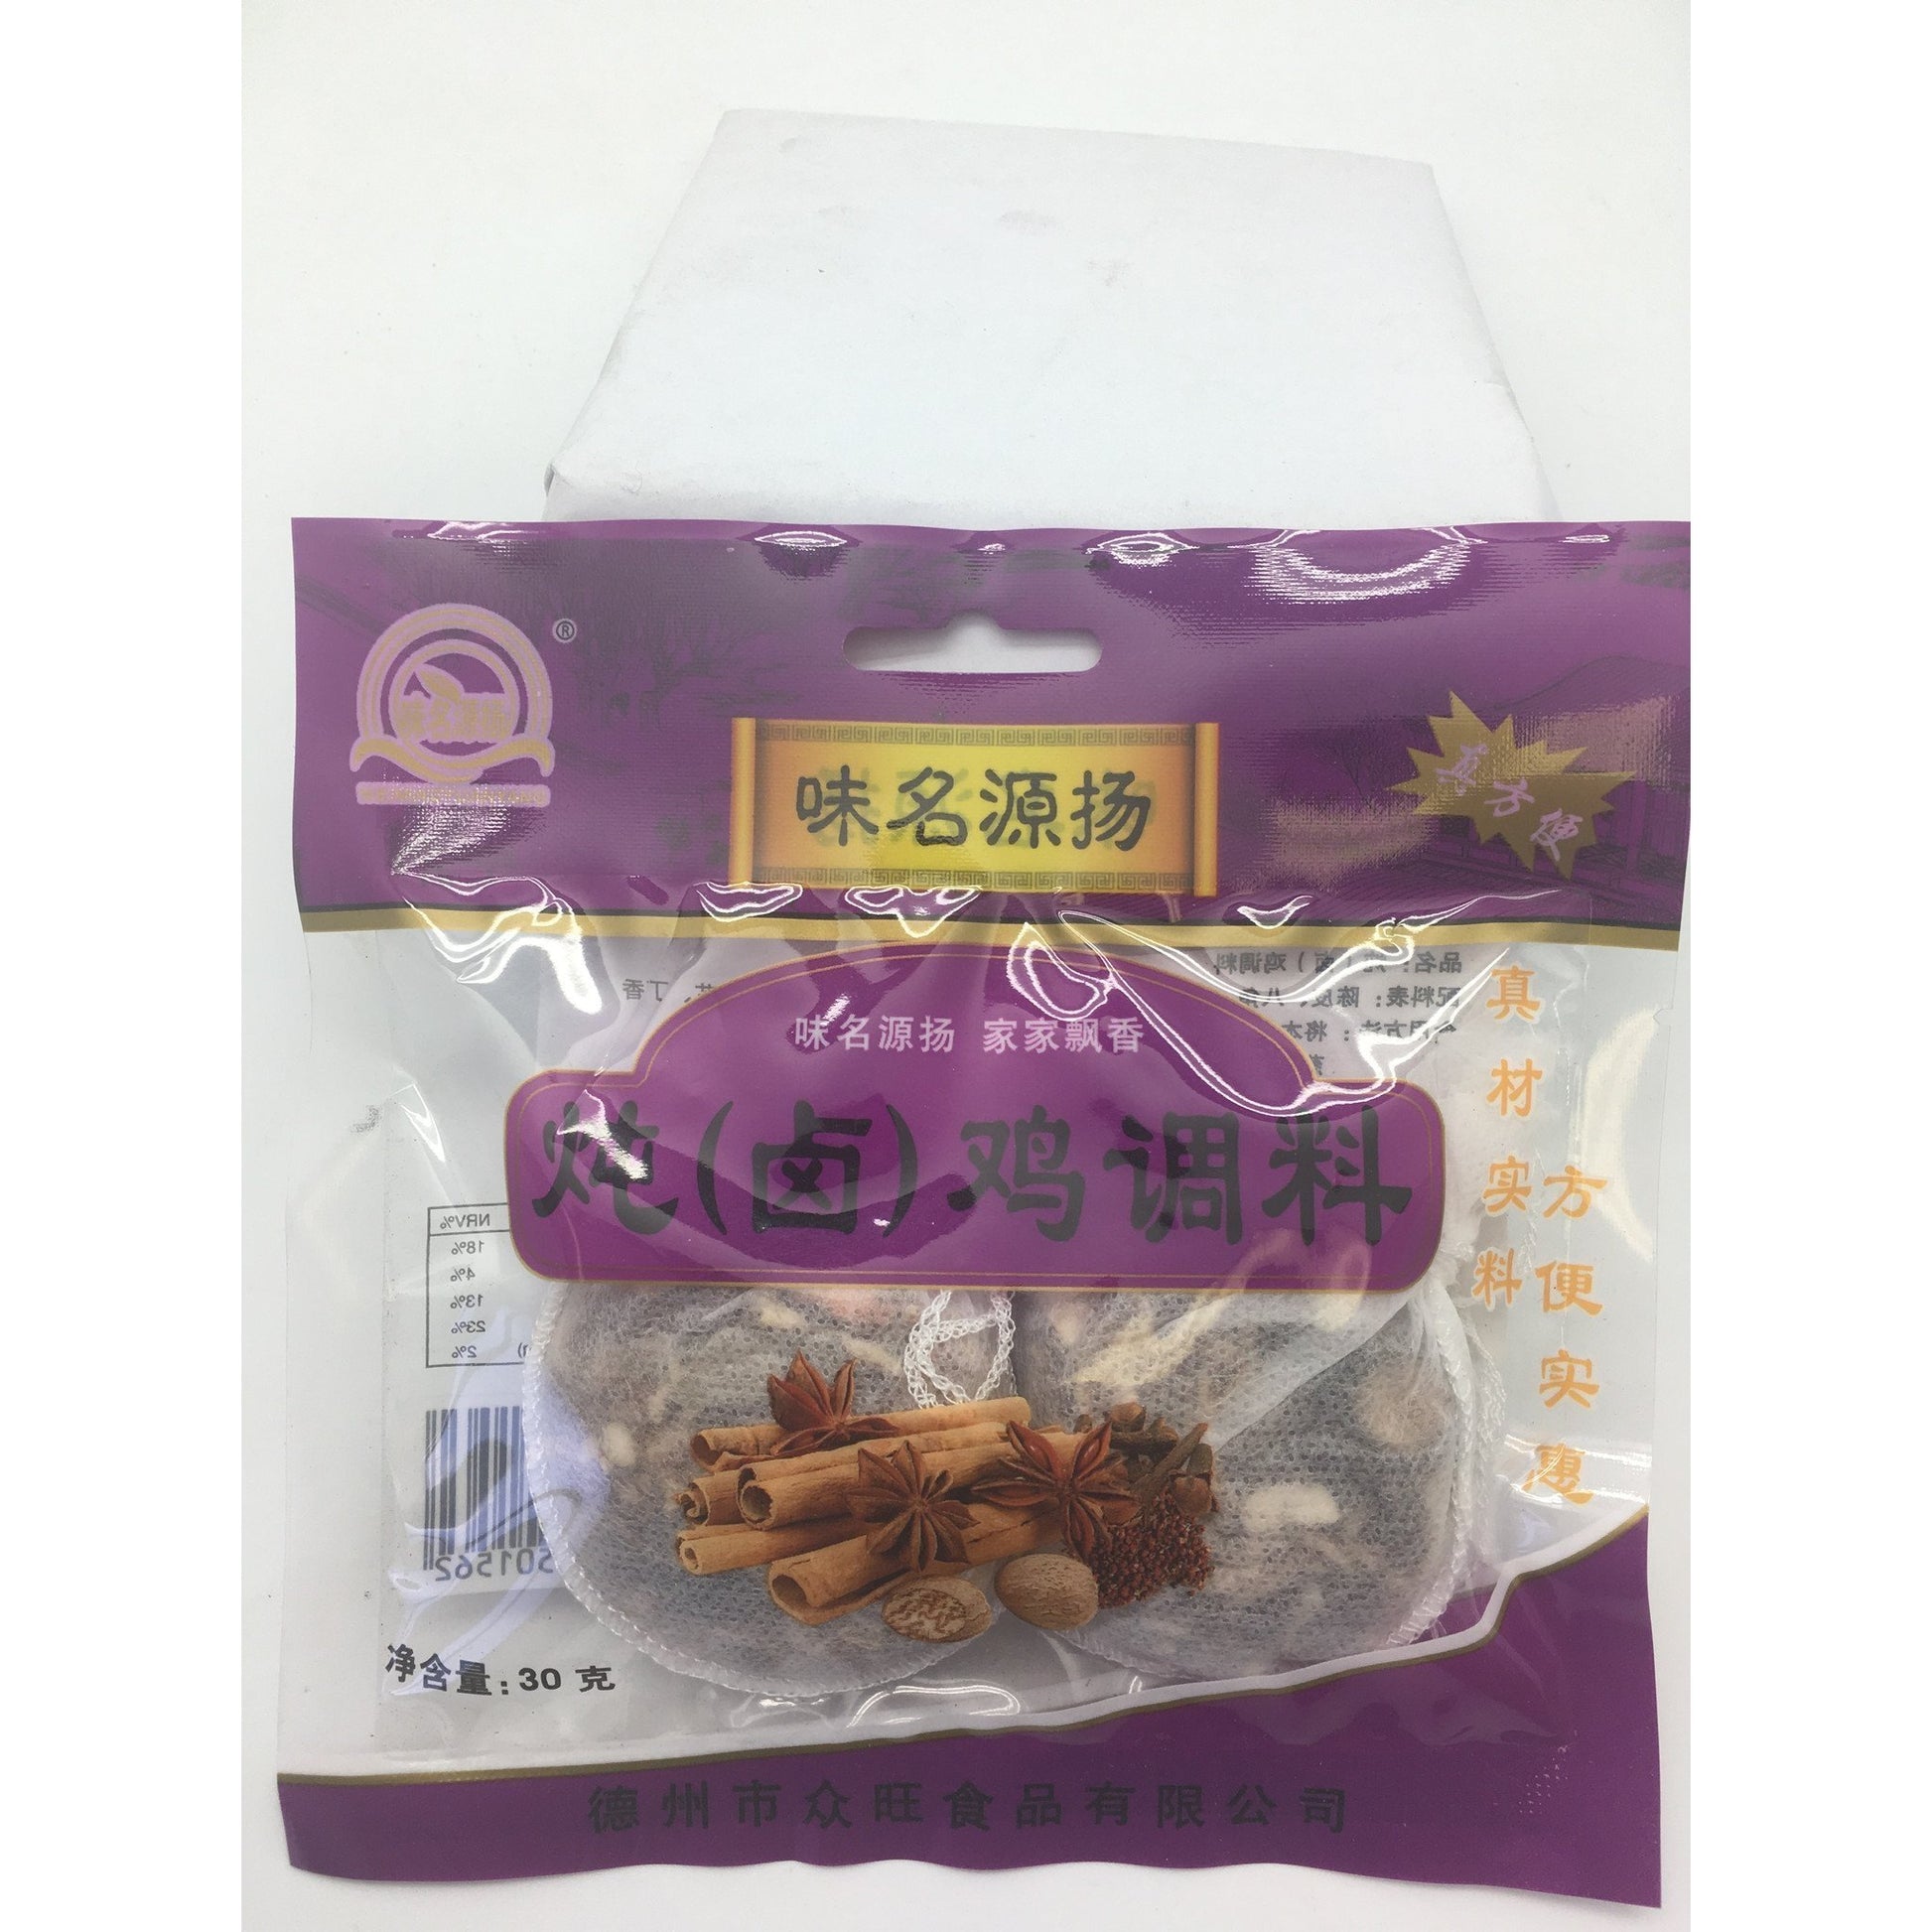 PD023C Wei Ming Yuan Yang Brand - soup mix 30g - 100 bags / 1 CTN - New Eastland Pty Ltd - Asian food wholesalers